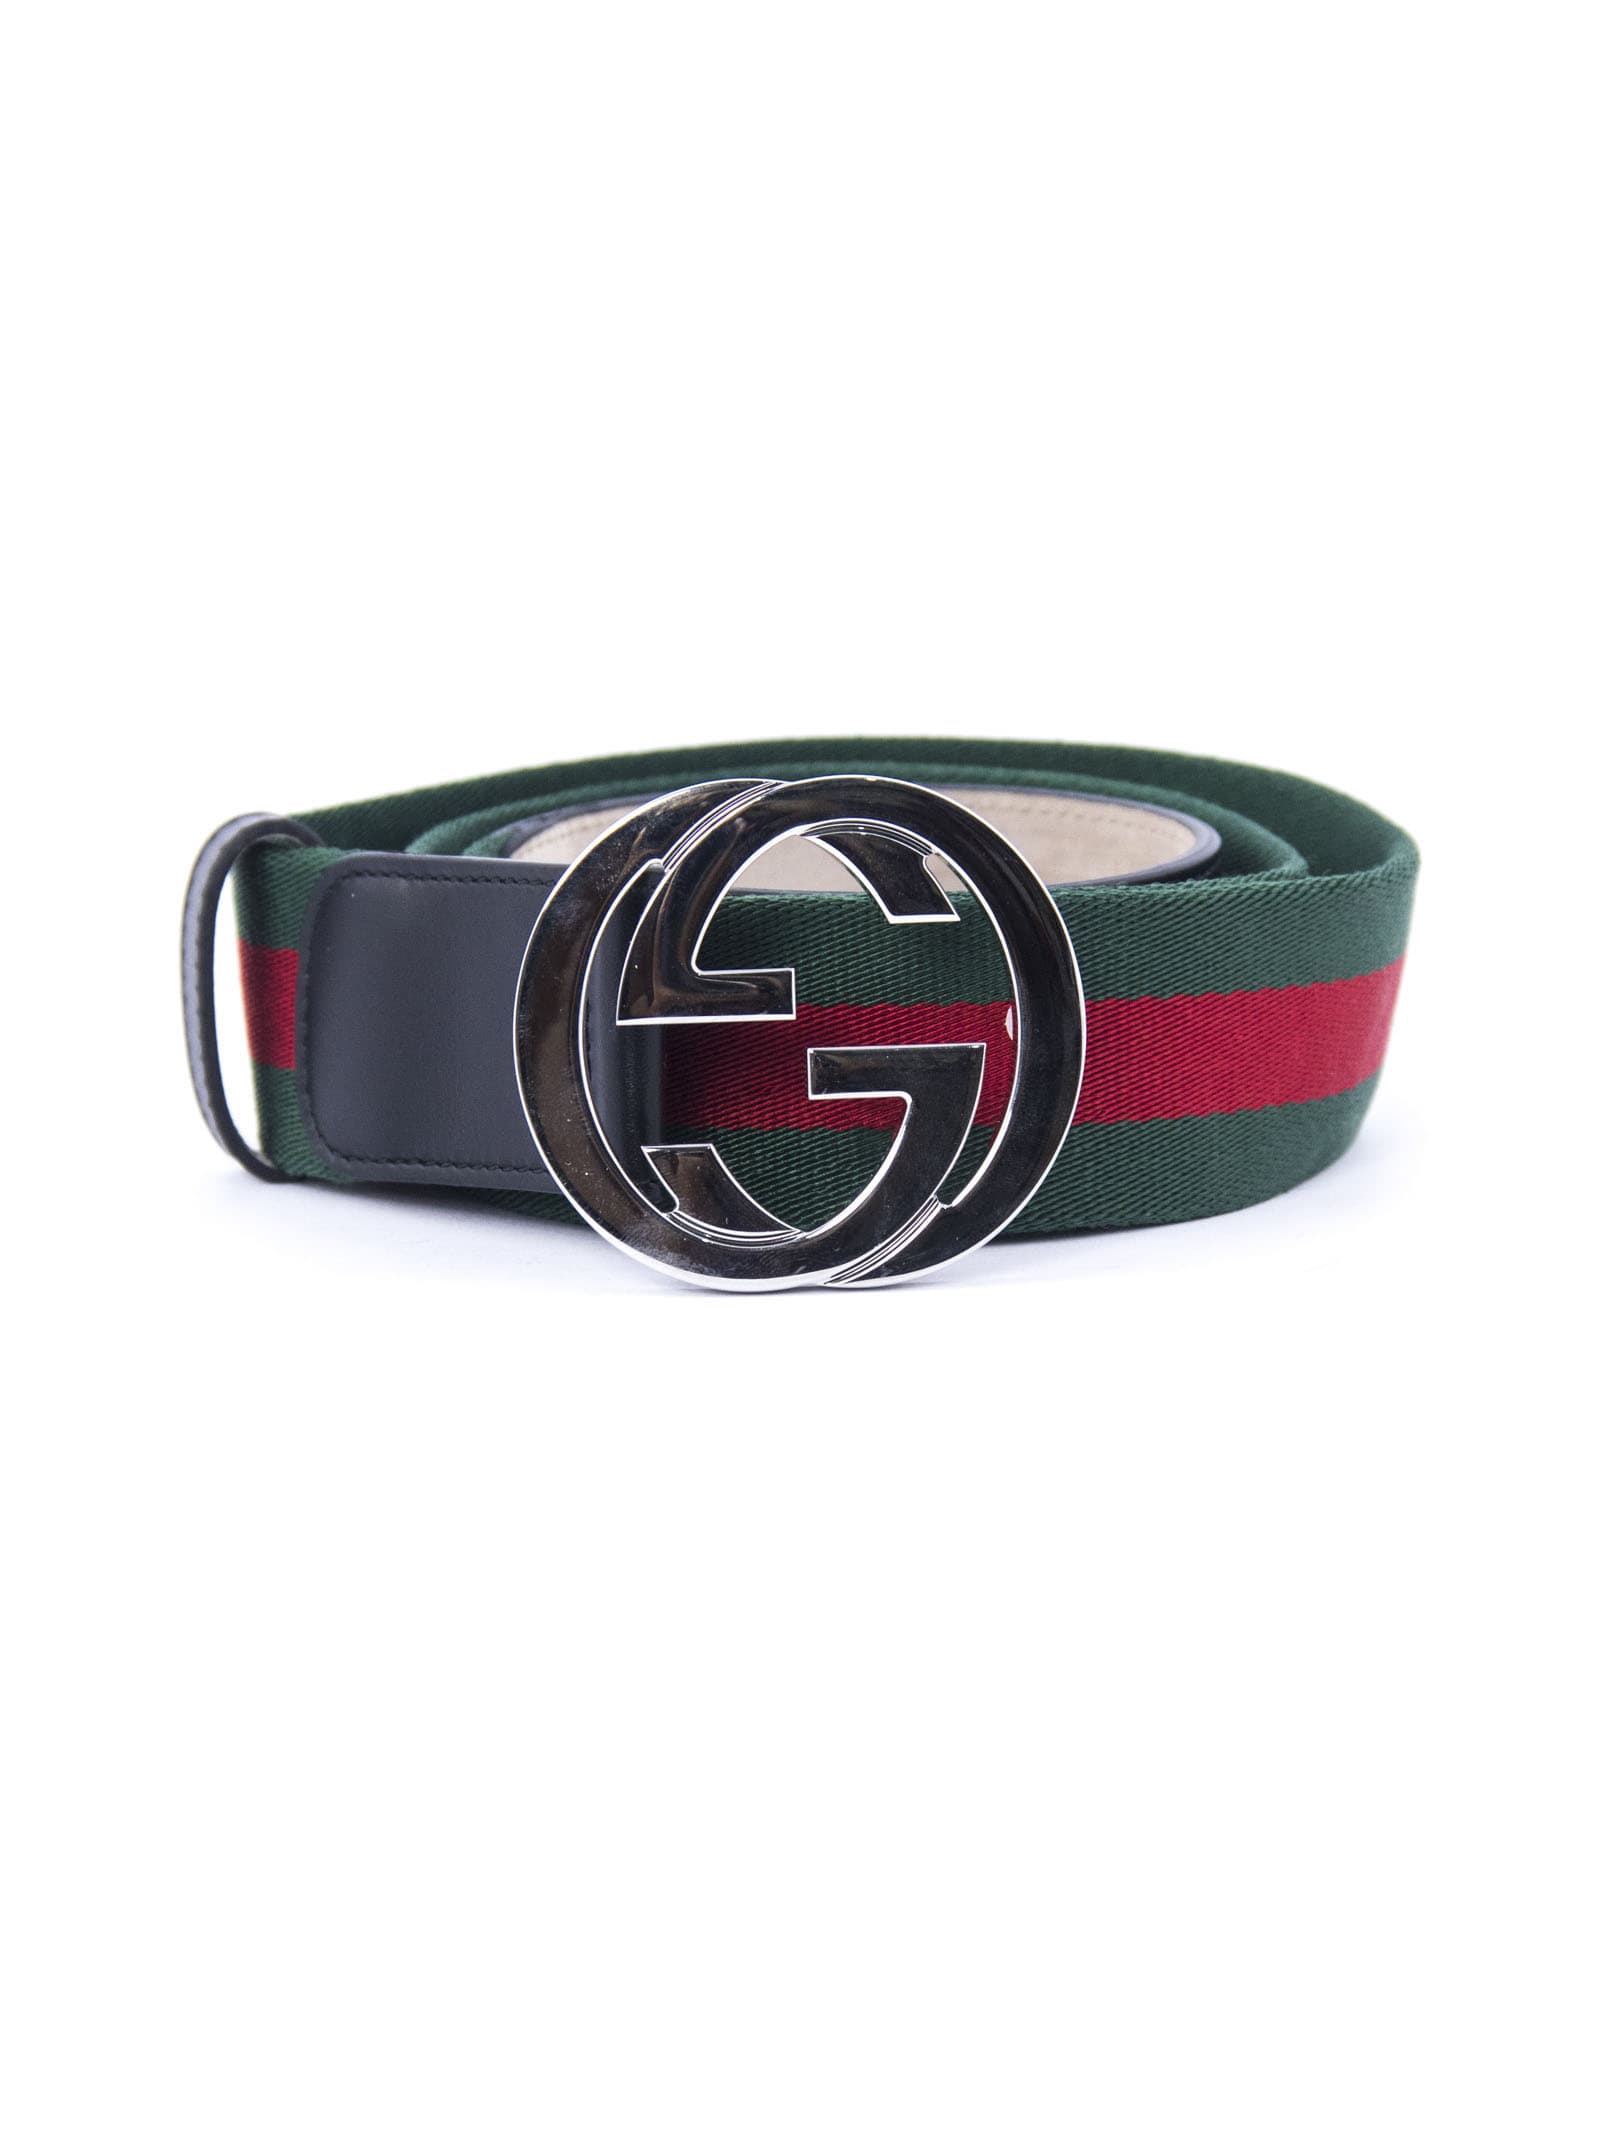 gucci belt website